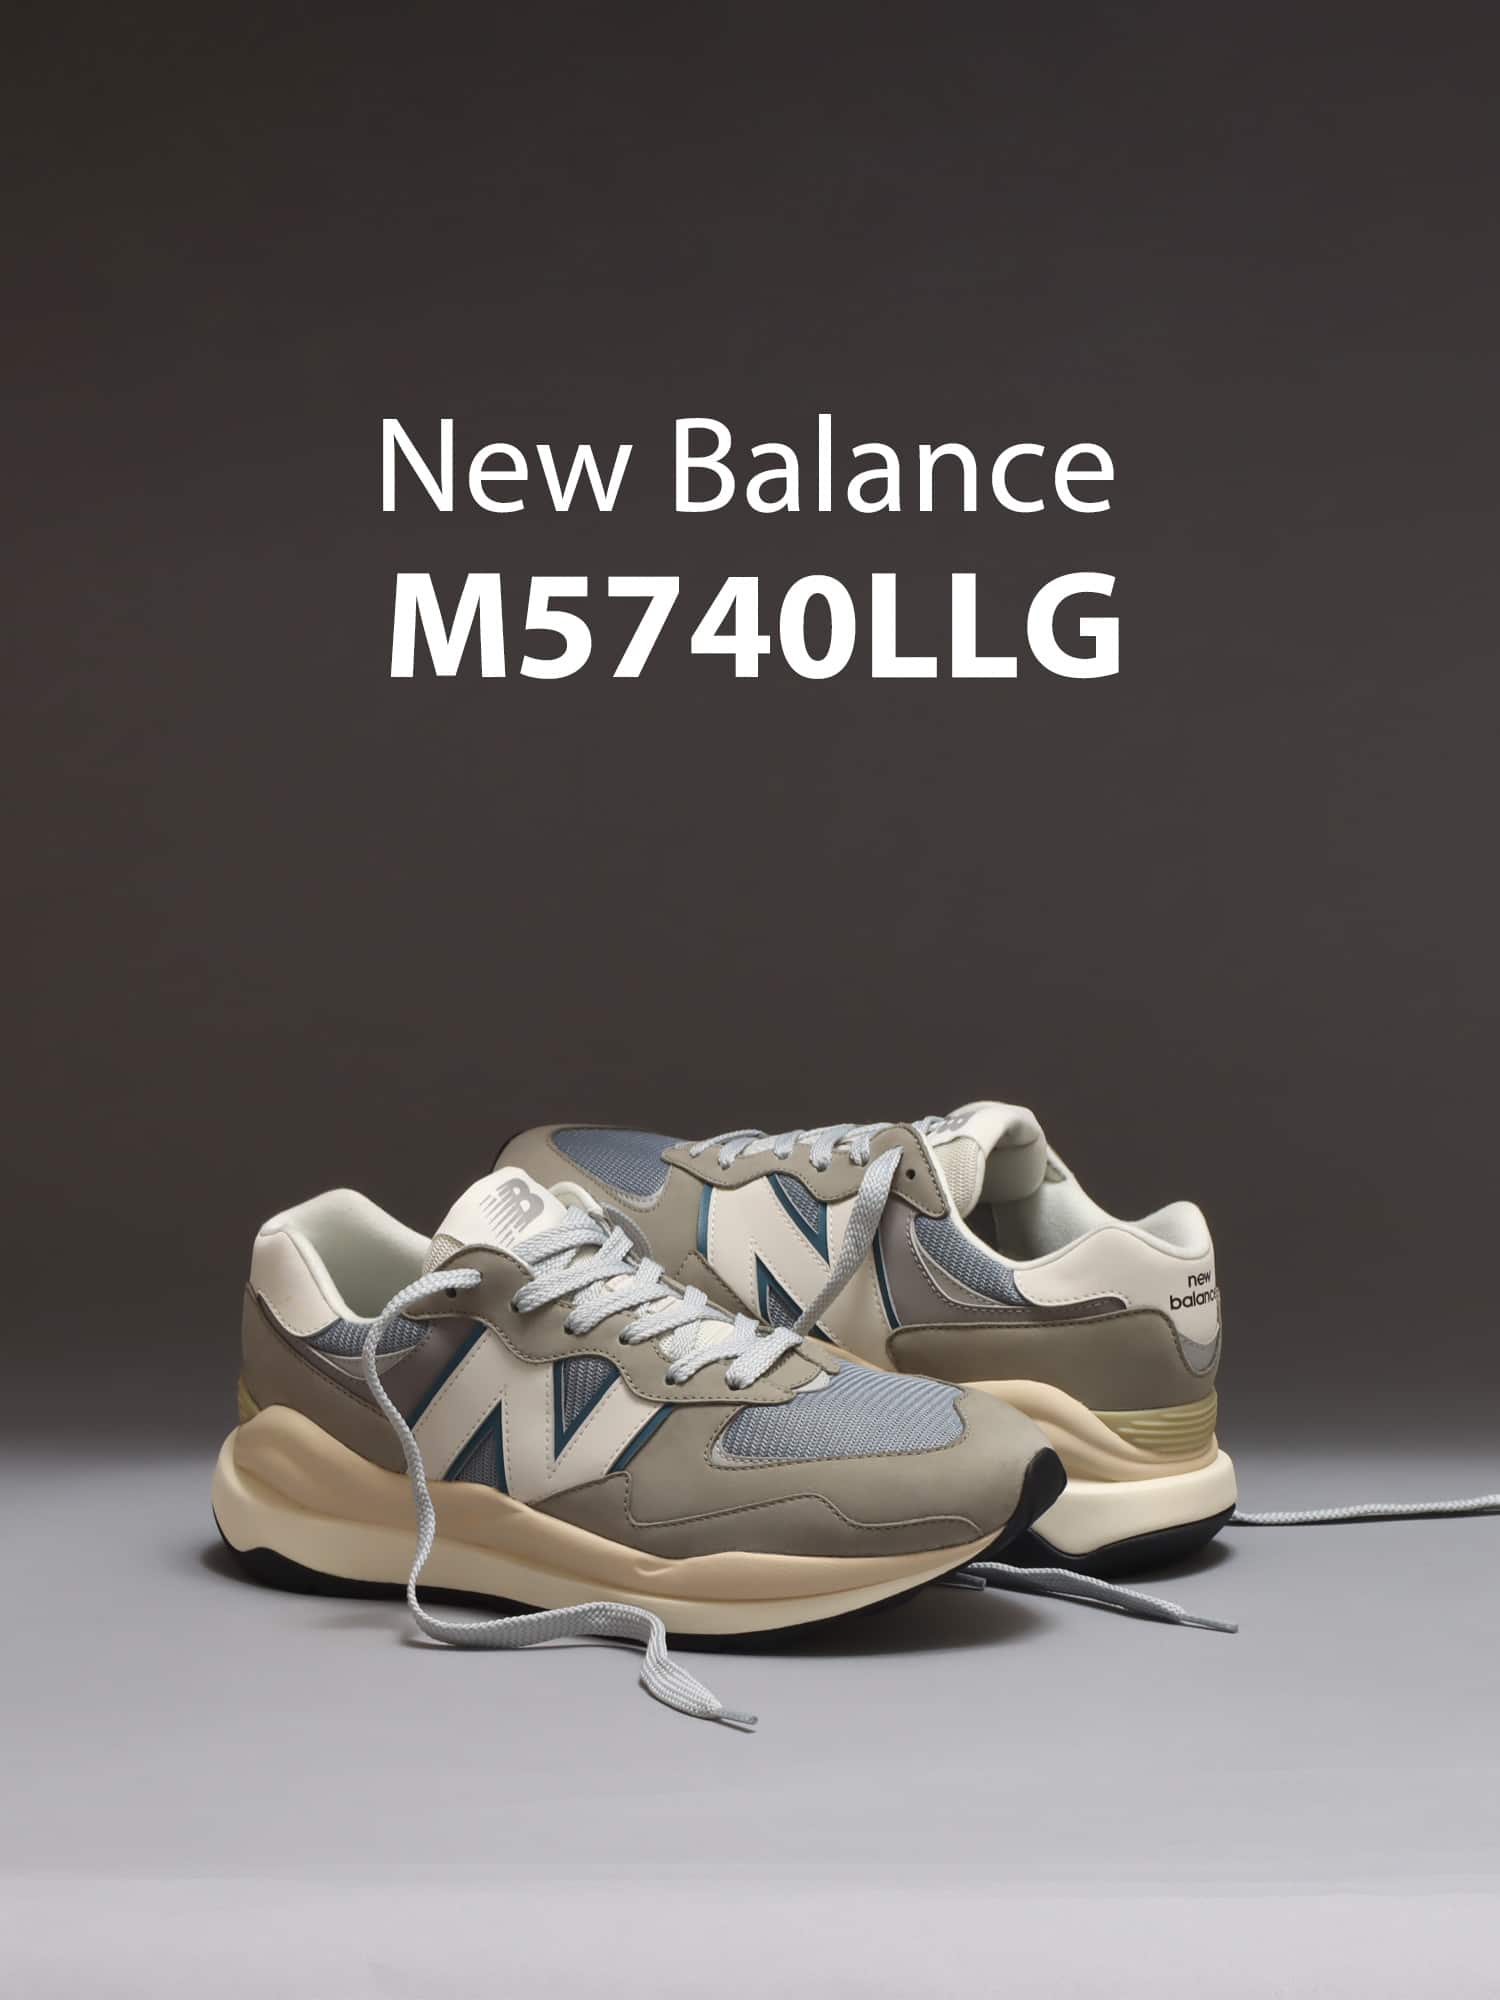 New Balance M5740LLG